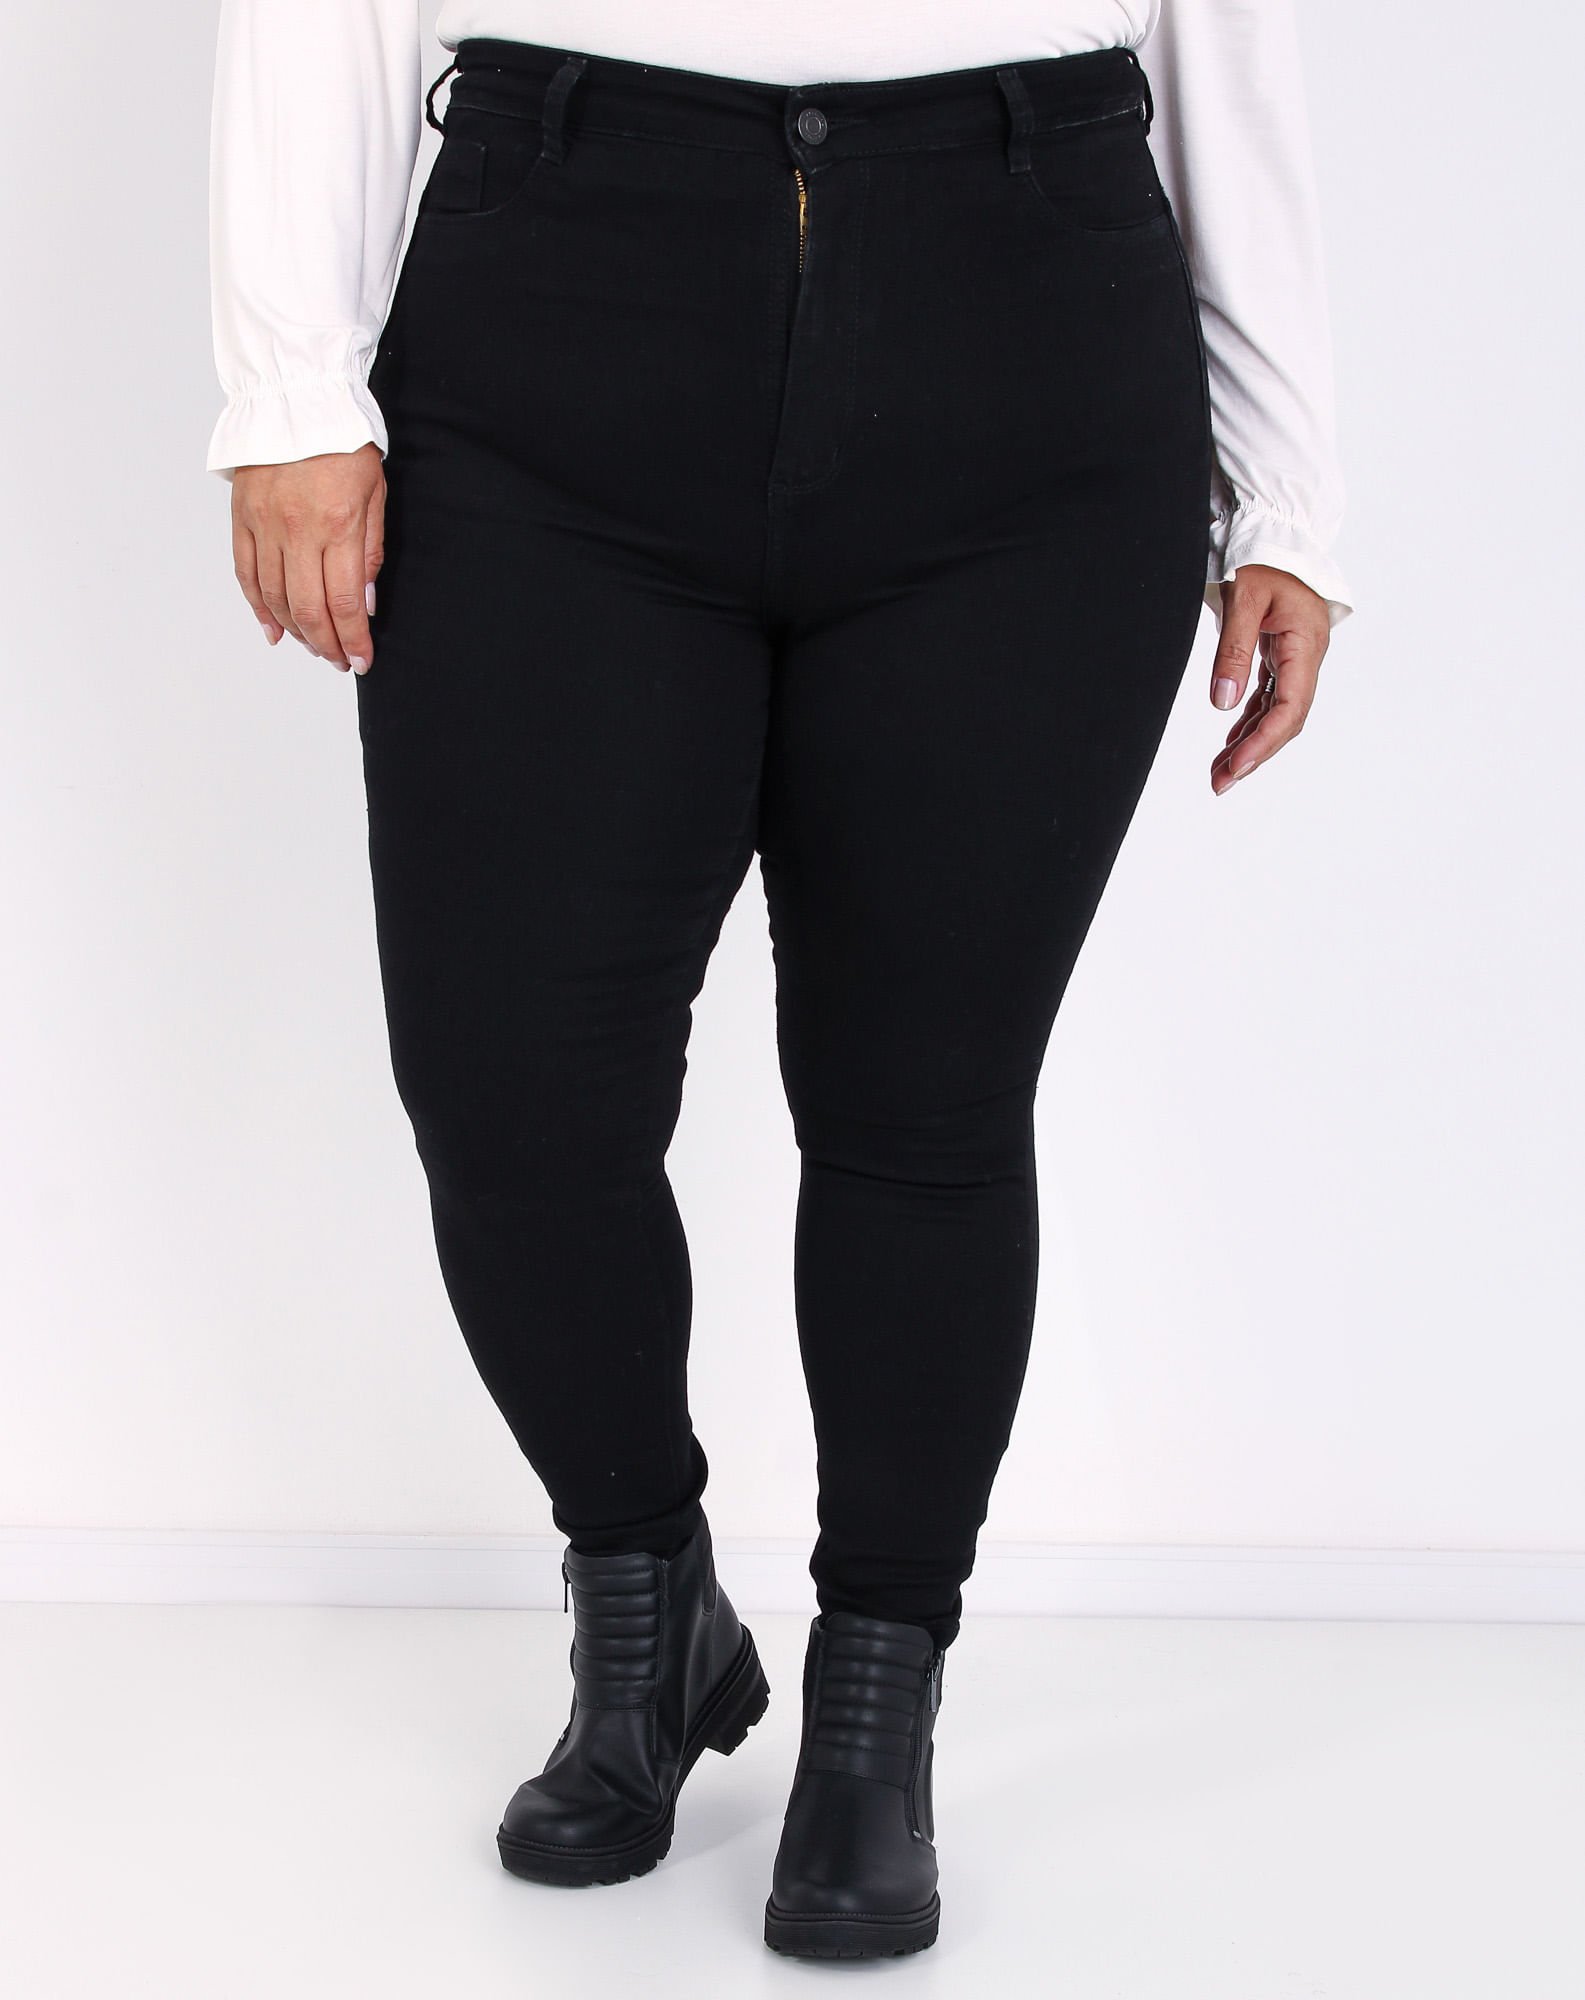 701659001 calça jeans plus size skinny feminina jeans black 46 9dc